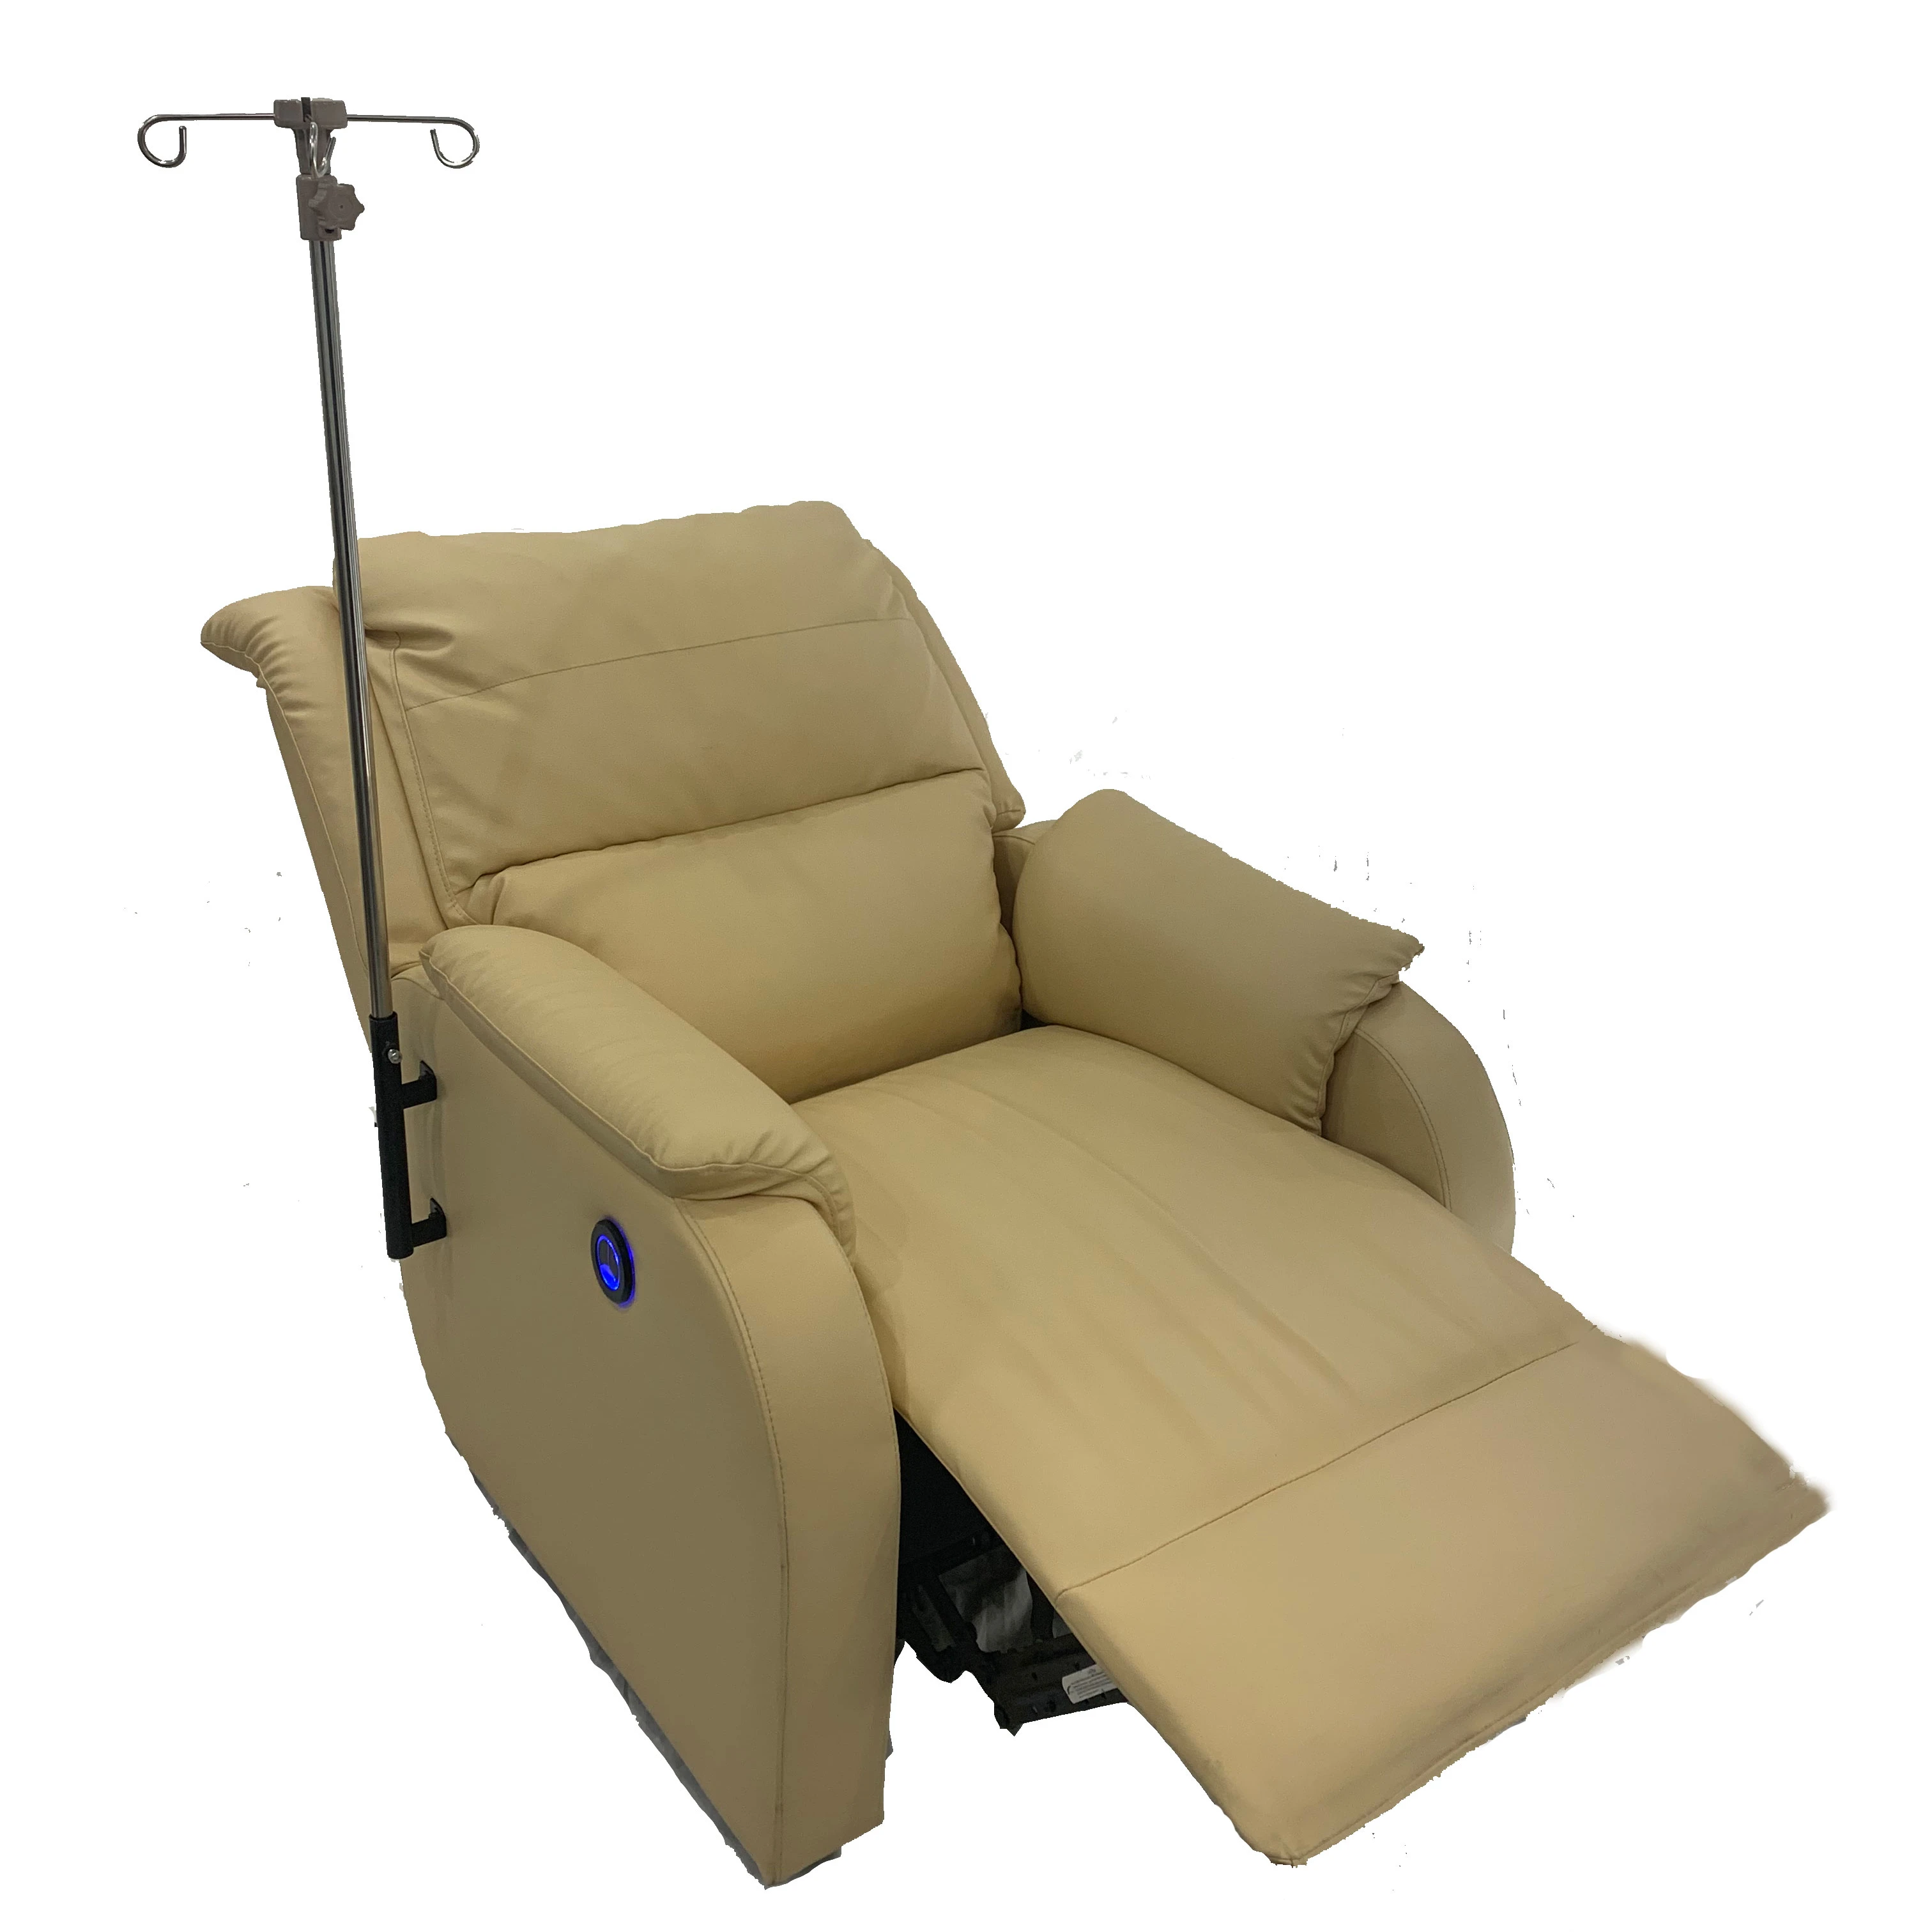 EU-MC511 Blood Donation Chair Luxury high quality medical recliner dialysis chair blood donate transfusion chair